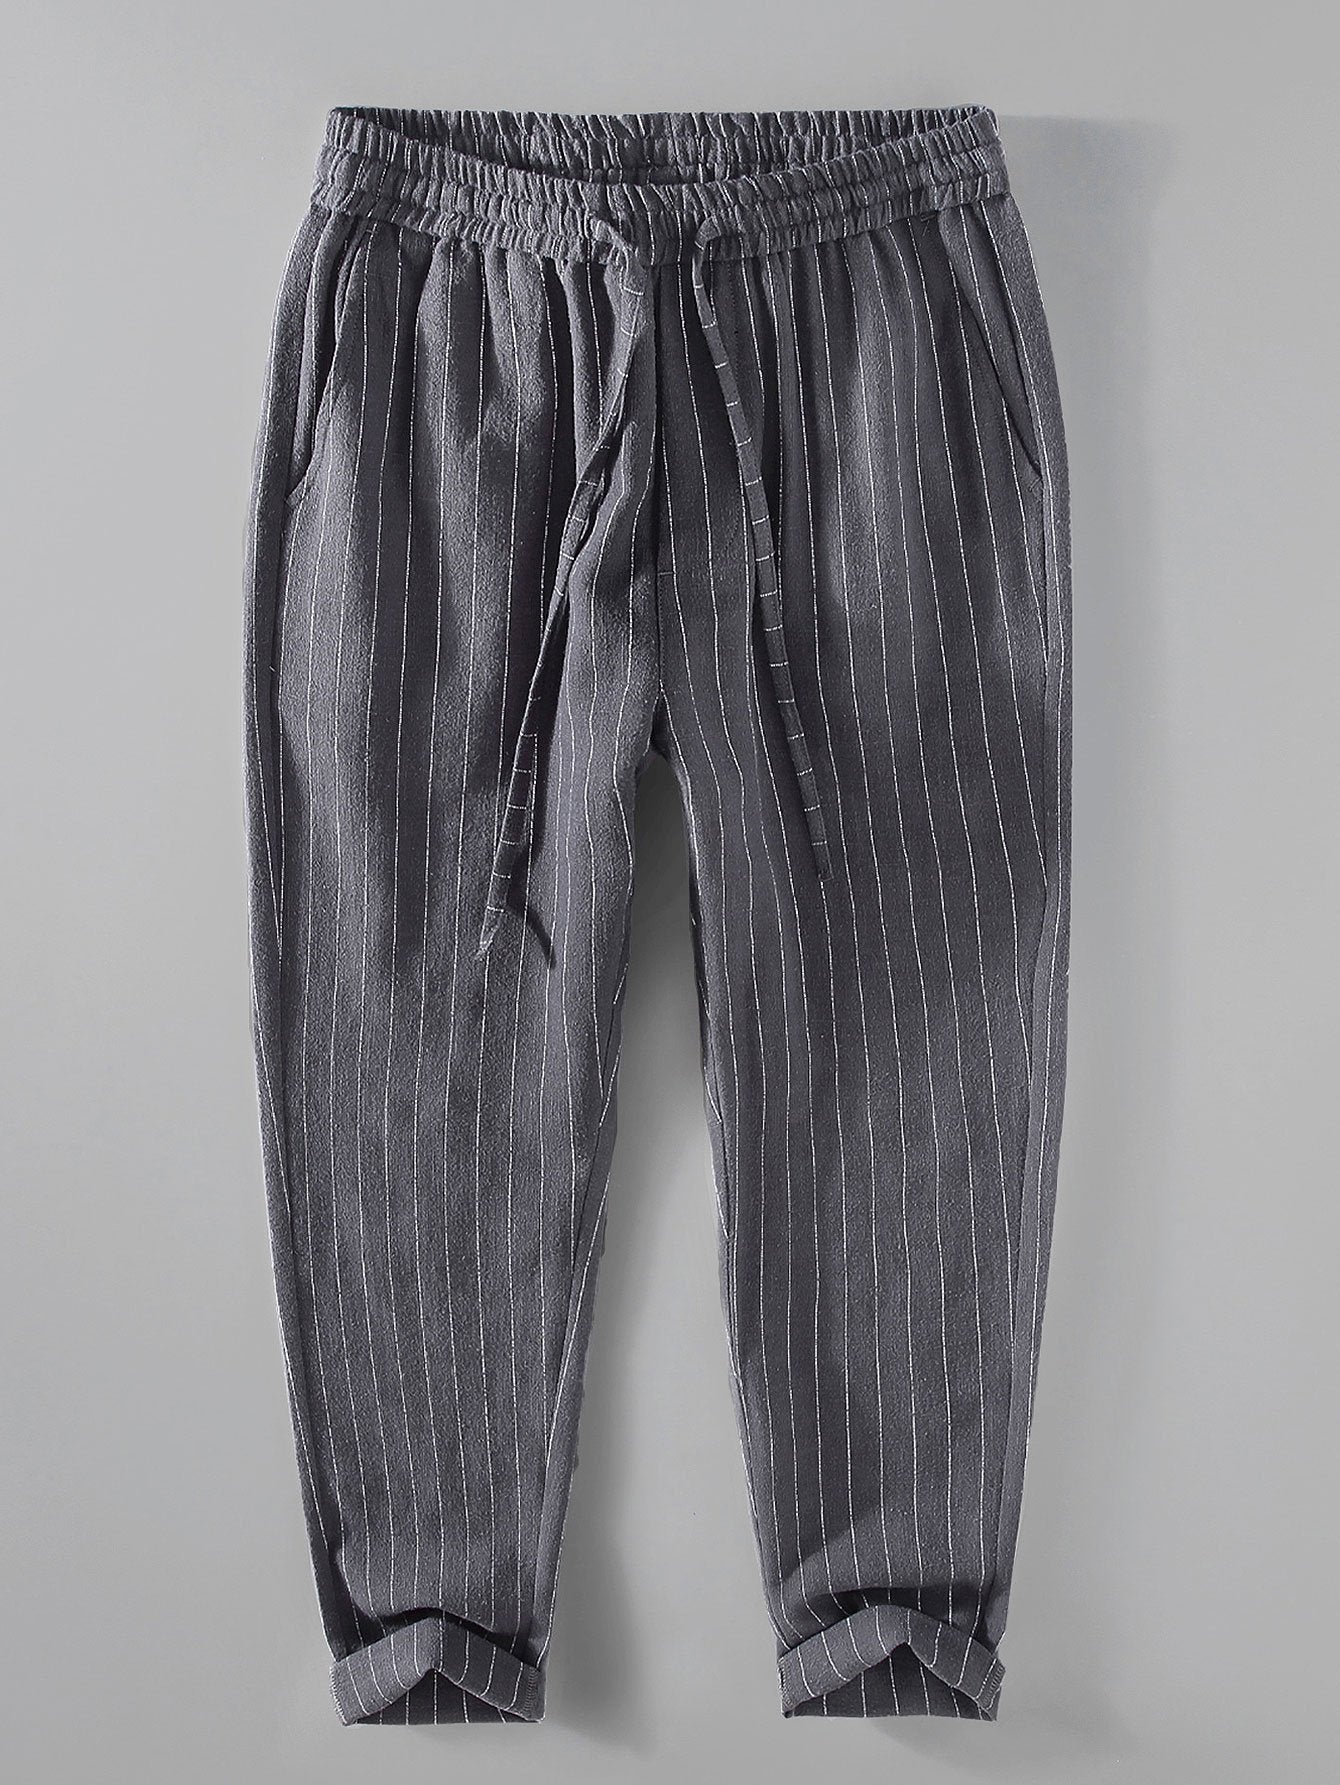 Striped Linen Cotton Blend Cropped Pants